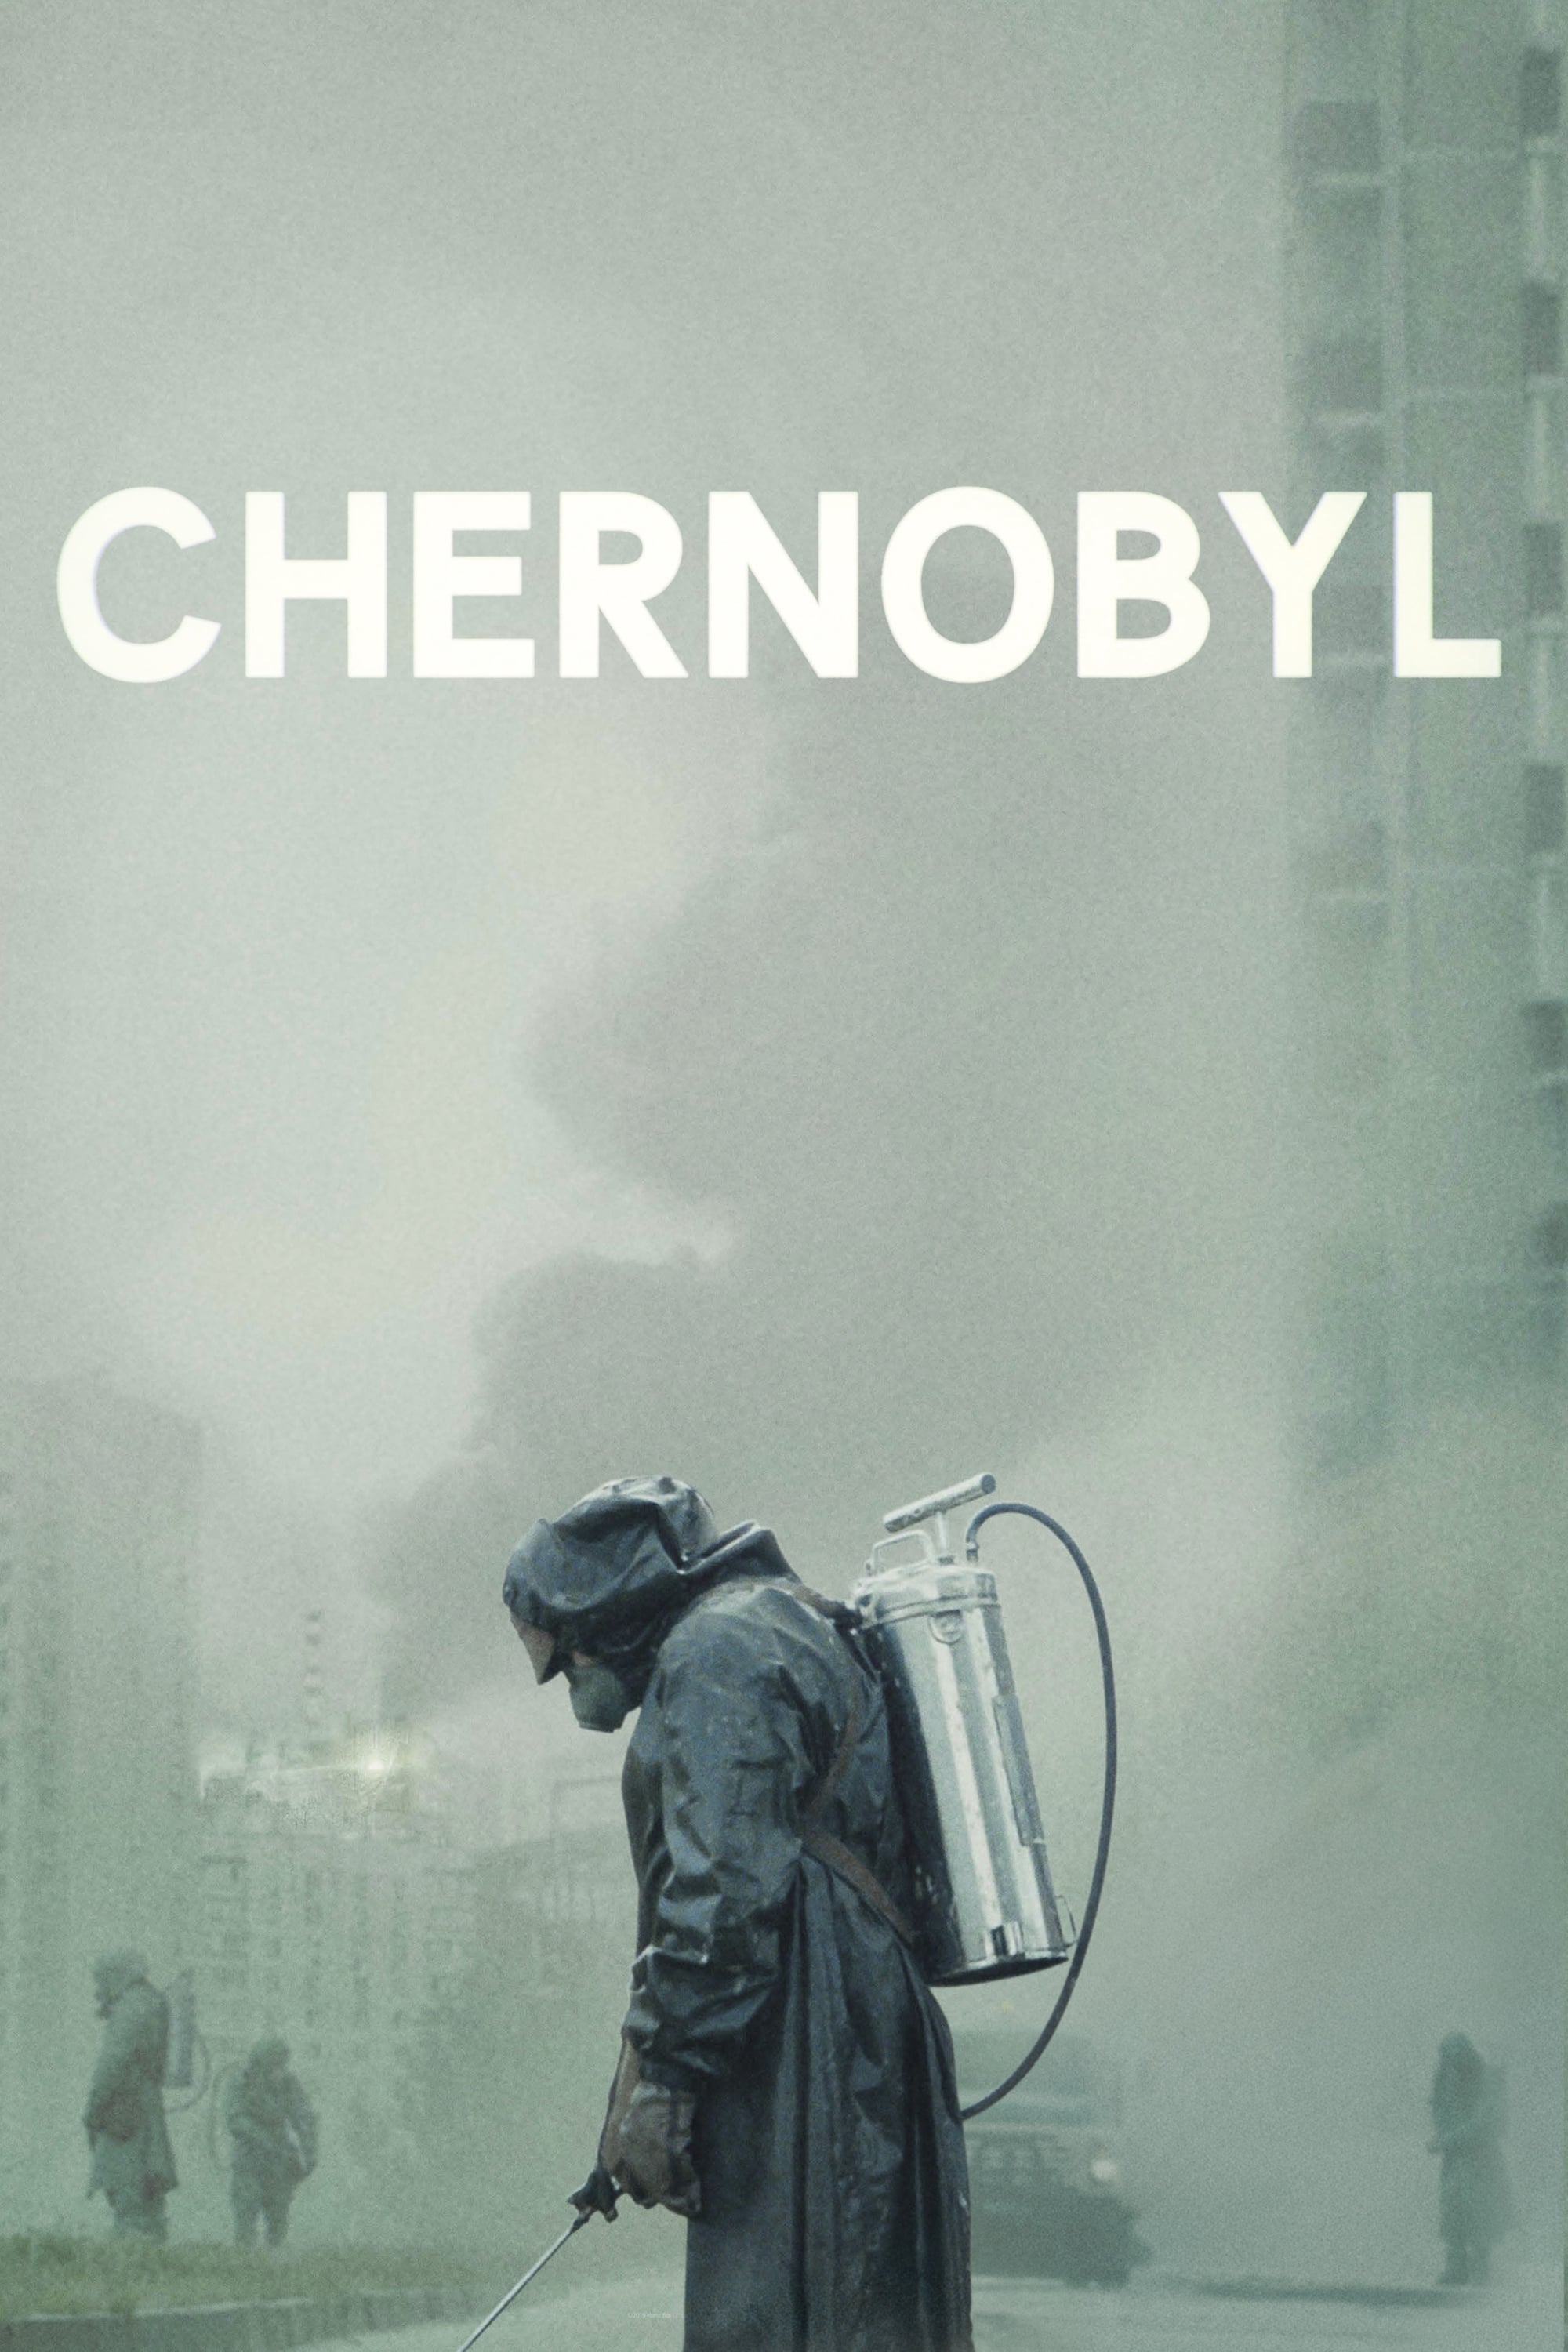 Chernobyl rating